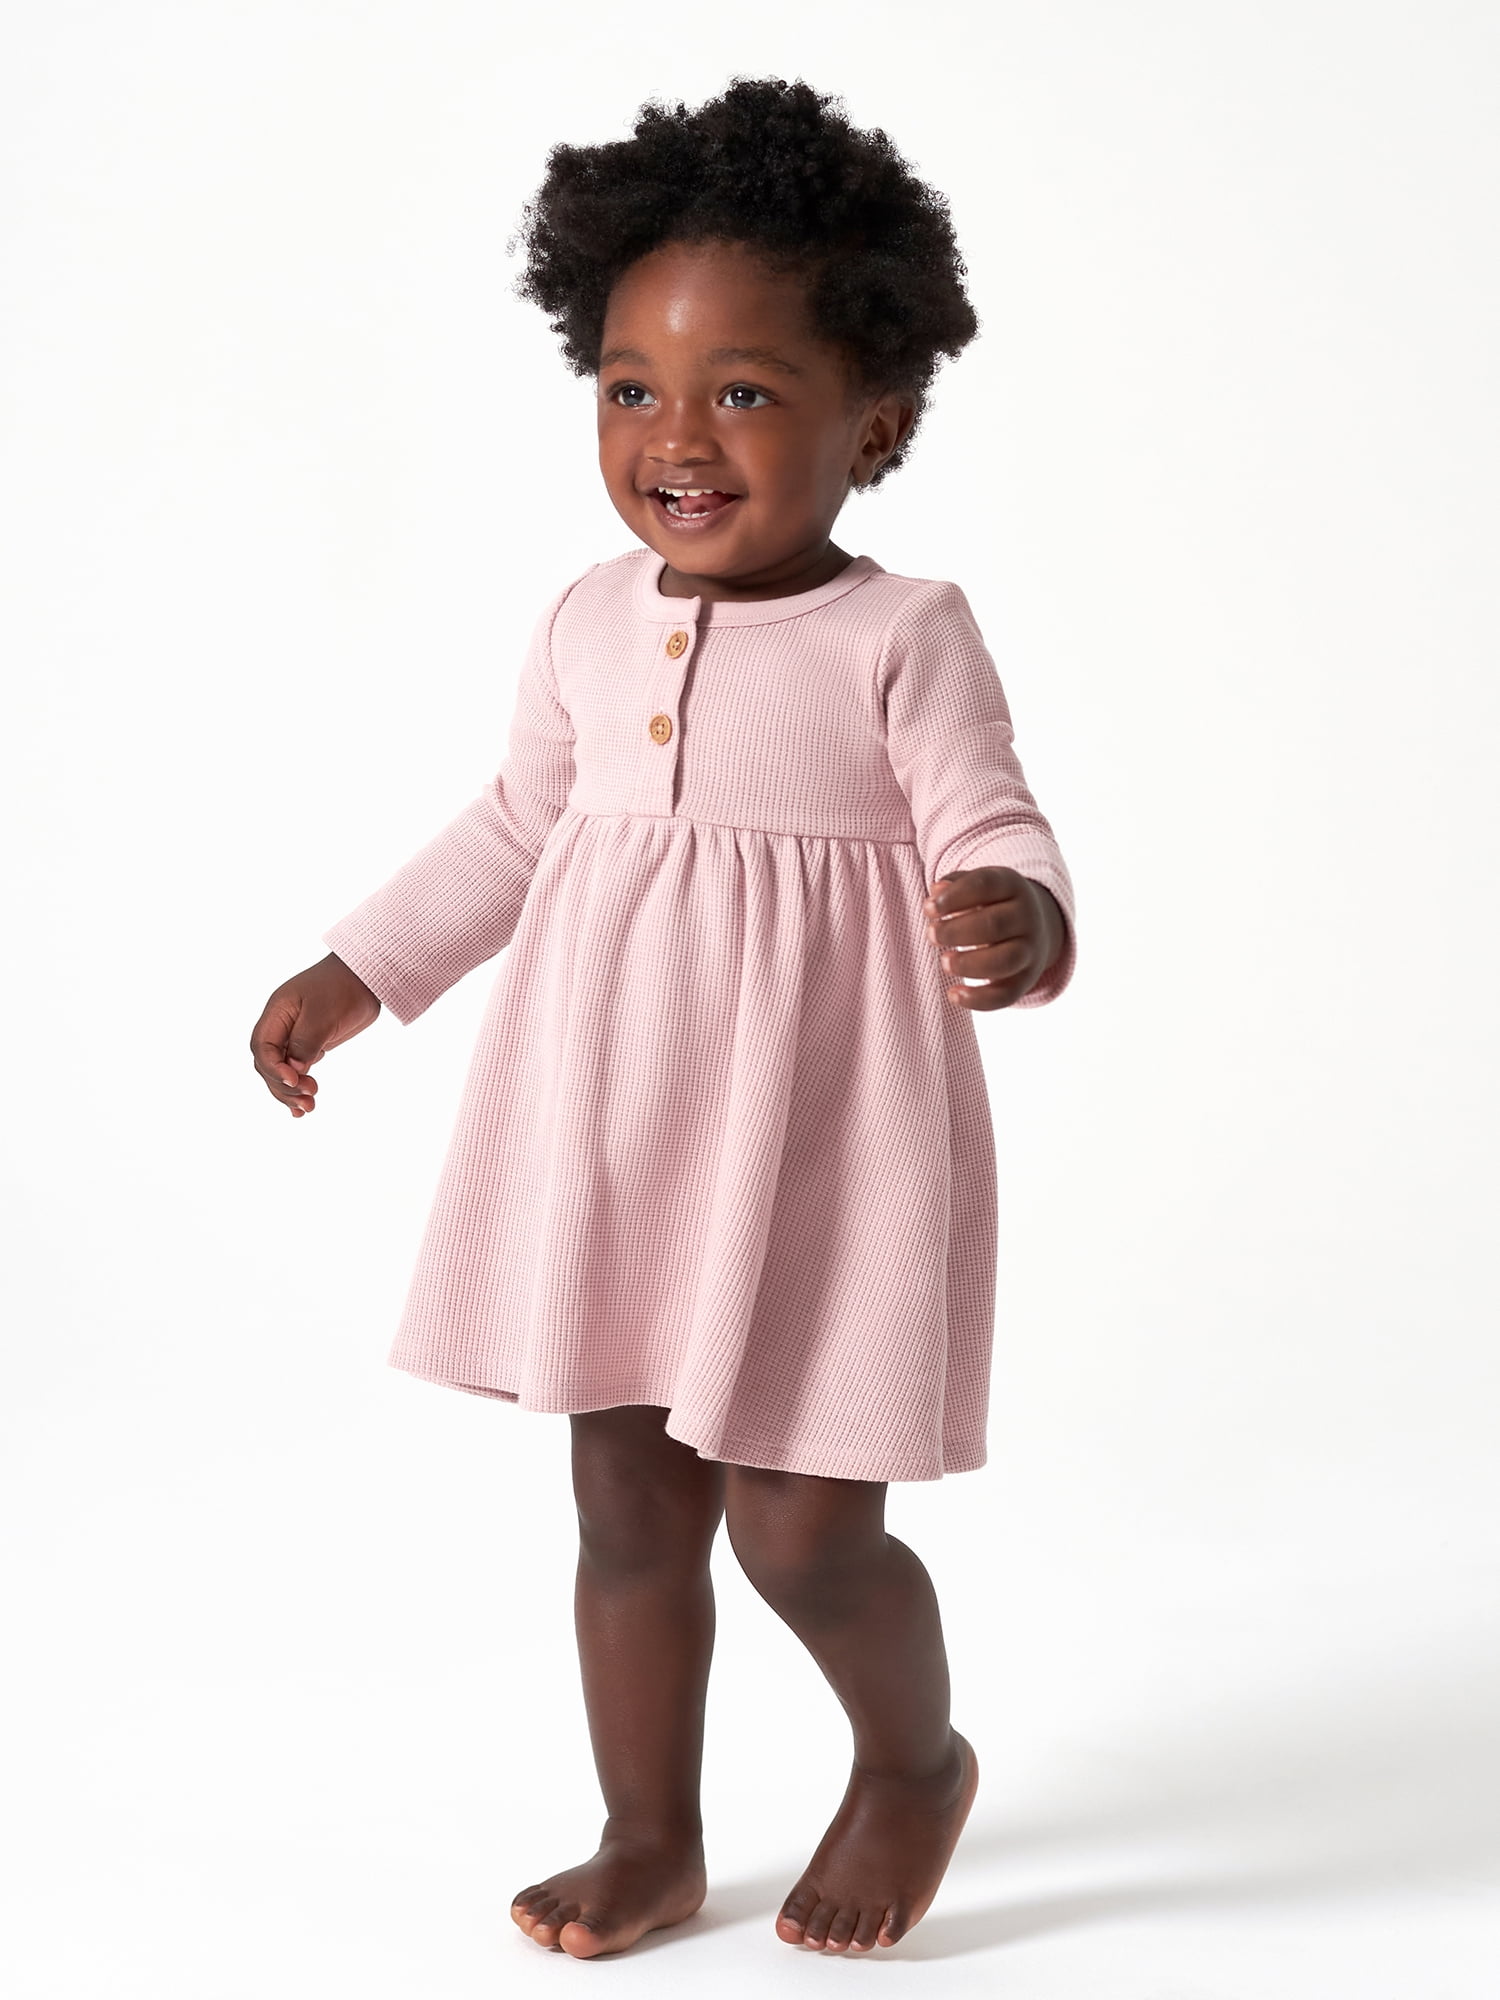 Sofija Baby Girl Premium Outfits Newborn Toddler Fashion Cotton Velour 2 Options Sizes 1-18months 